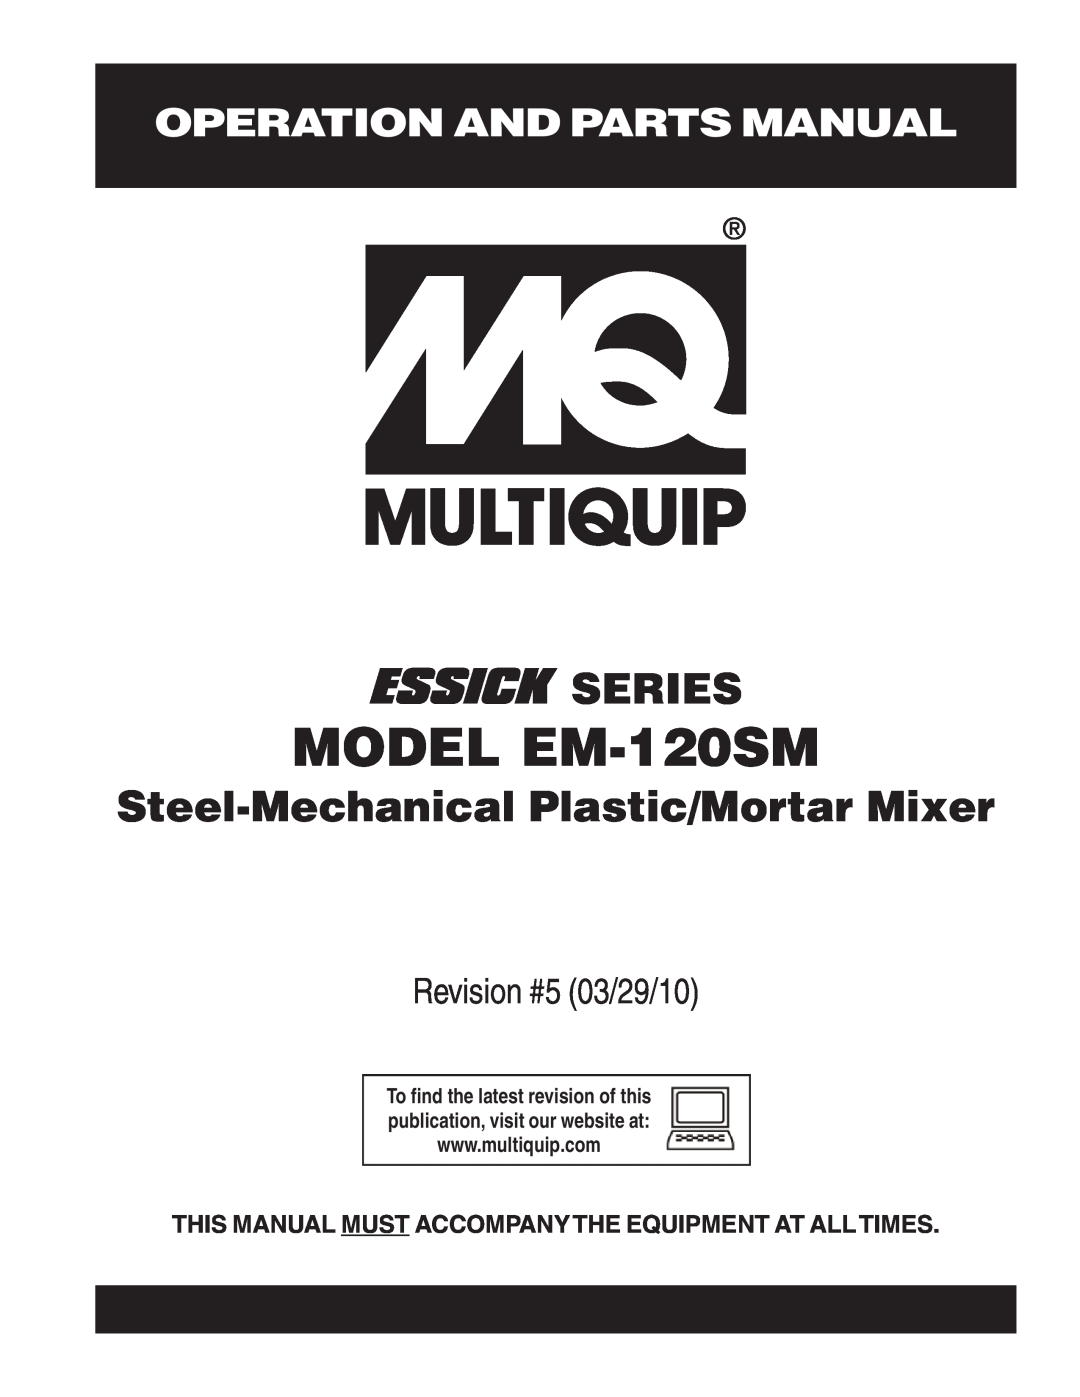 Multiquip manual Operation And Parts Manual, MODEL EM-120SM, Series, Steel-MechanicalPlastic/Mortar Mixer 